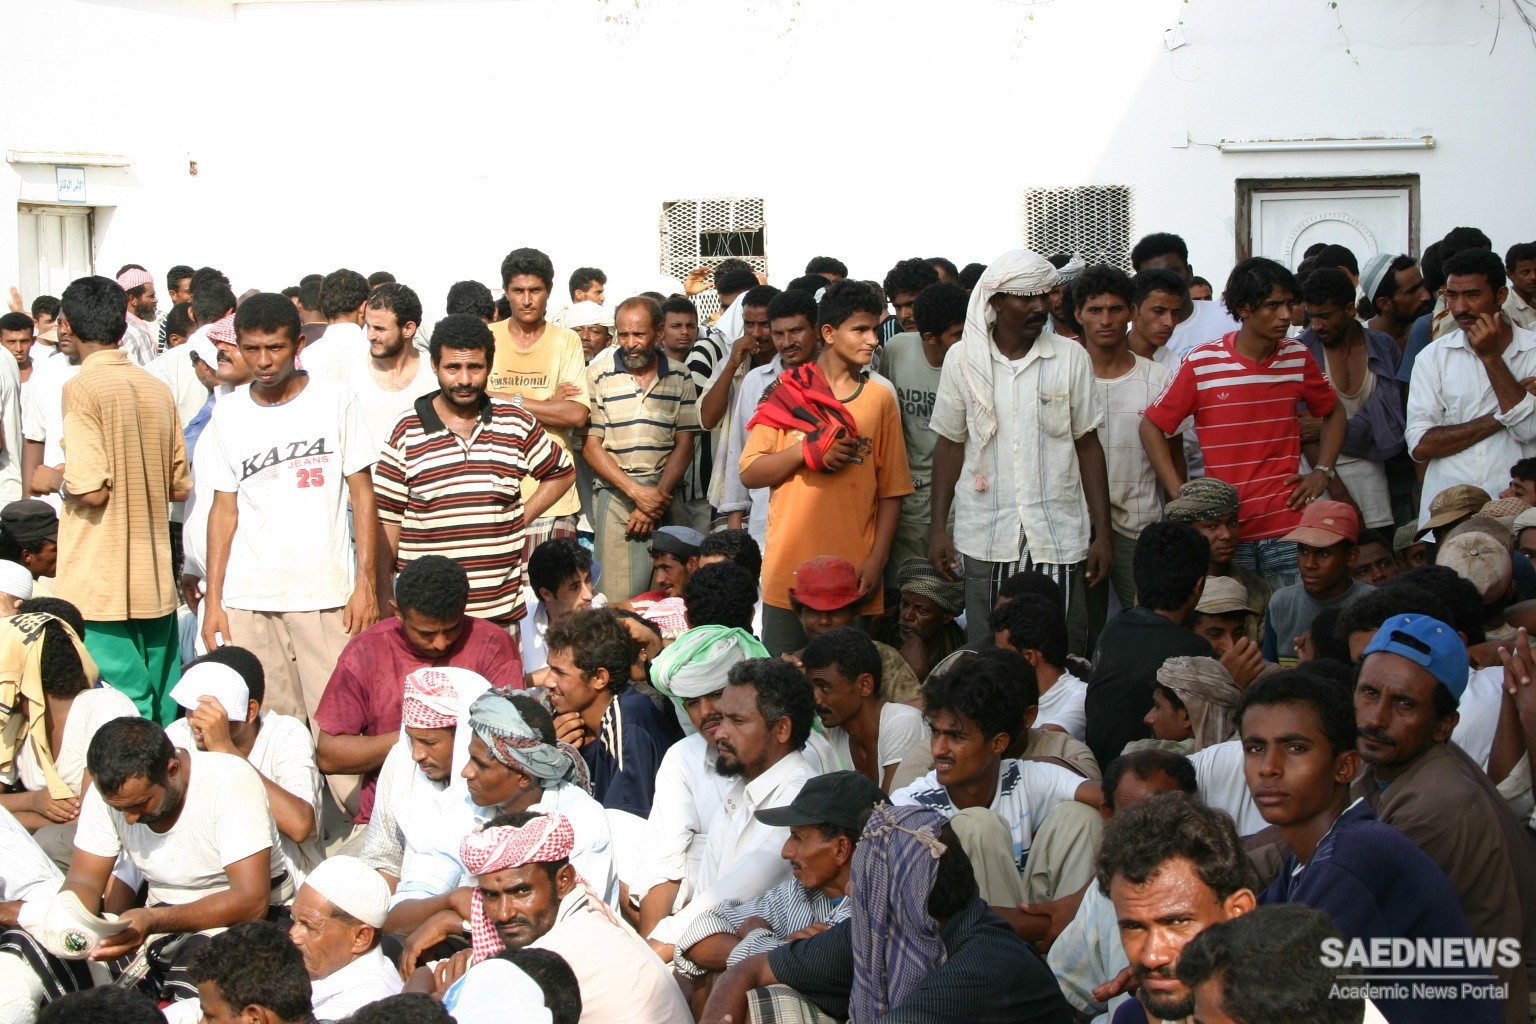 Human Rights Violation Reported in KSA Deportation Center